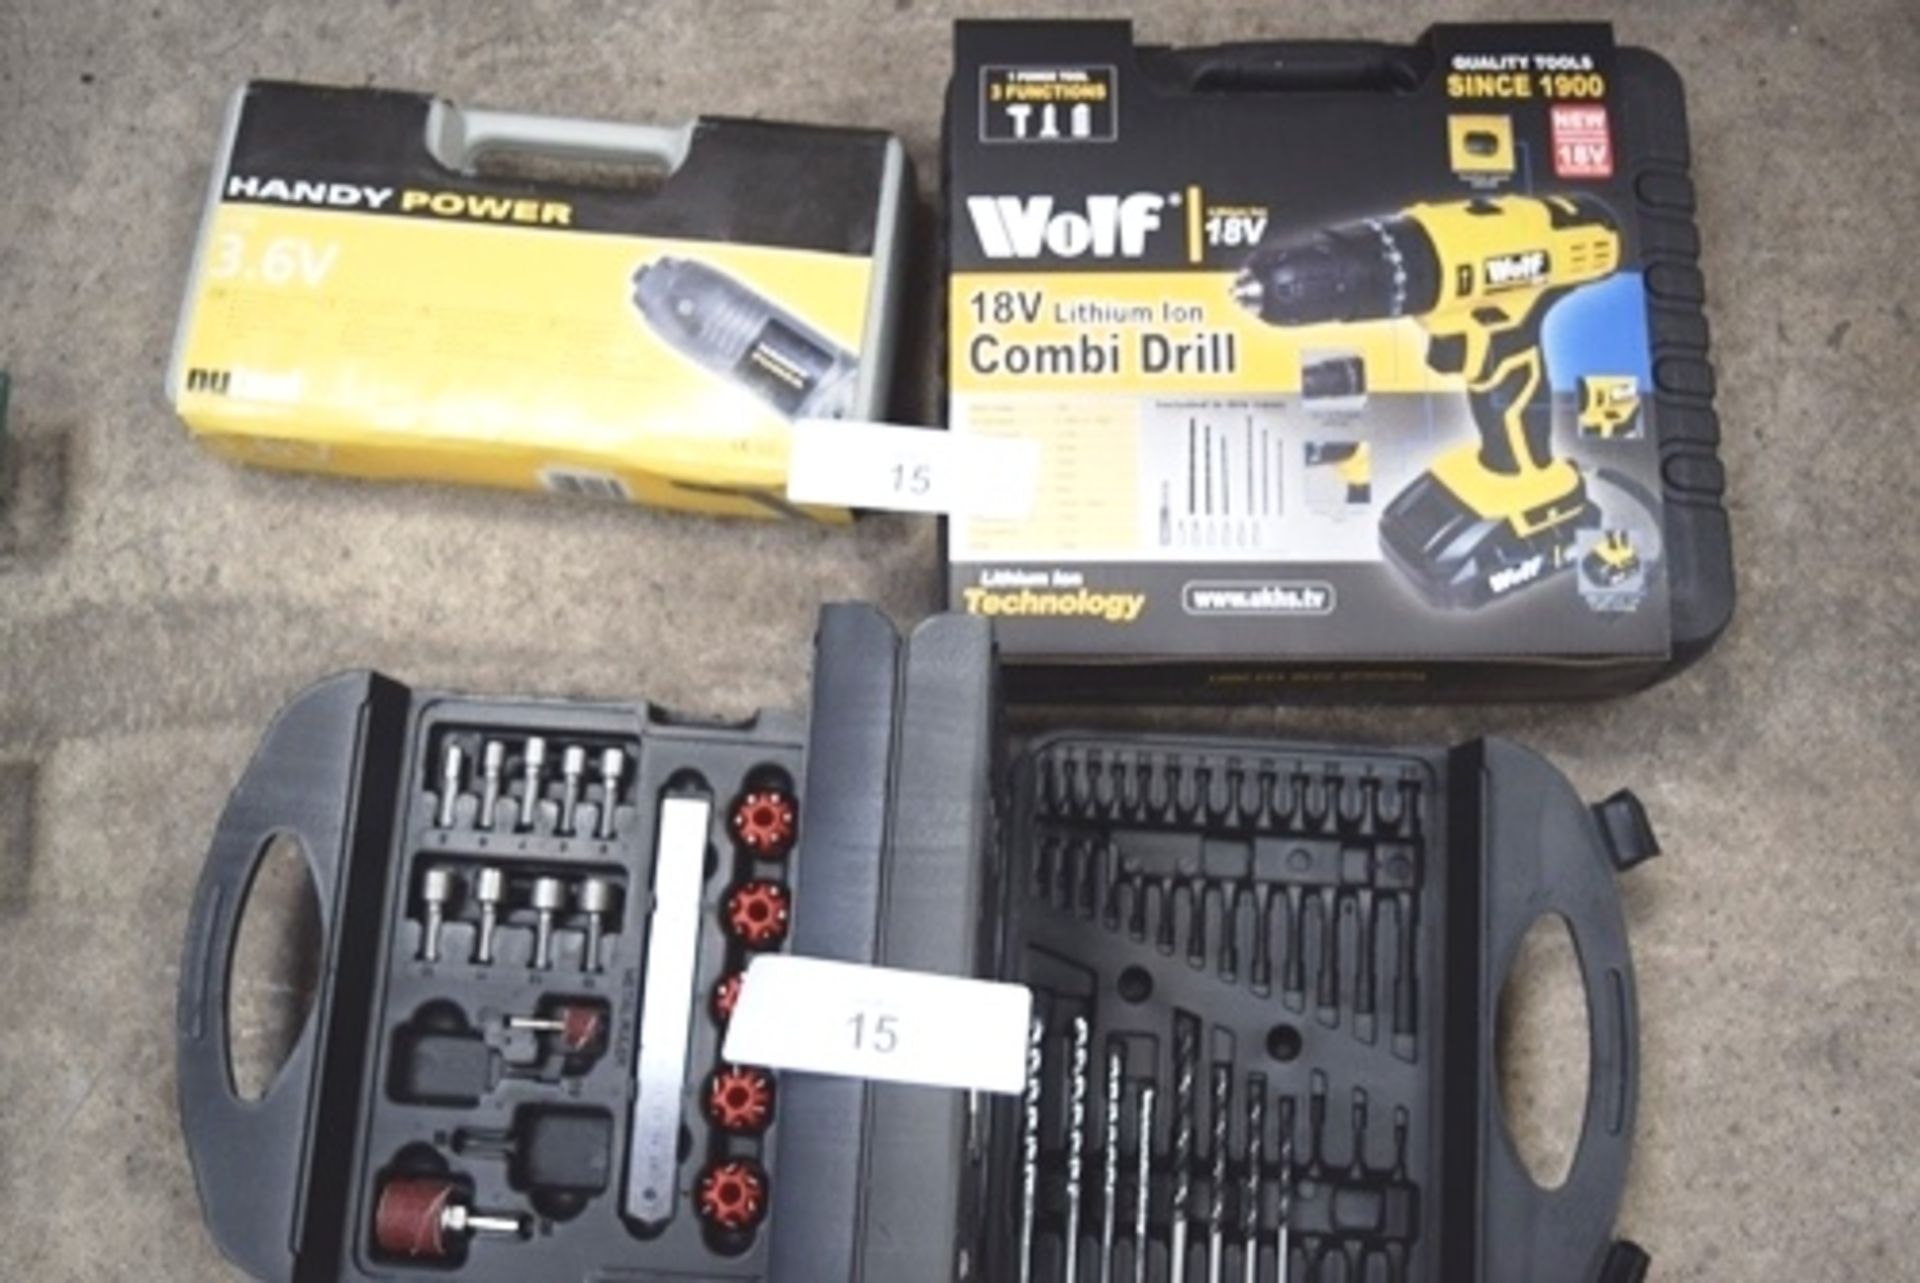 Assorted tools comprising Mylek drill bits, Nutool handy 3.6V power, 1 x Wolf cordless 18V drill (